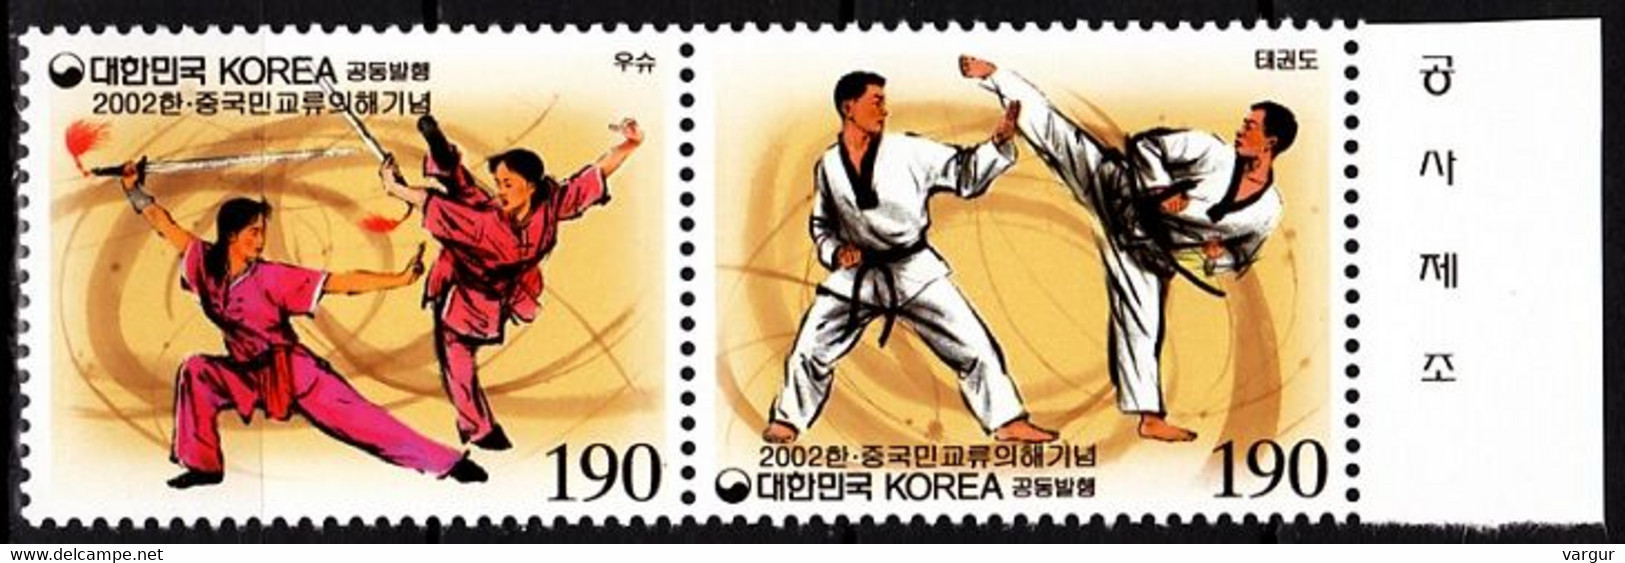 KOREA SOUTH 2002 Martial Sports: Teakwondo Kung-fu. Joint China. Pair, MNH - Emisiones Comunes